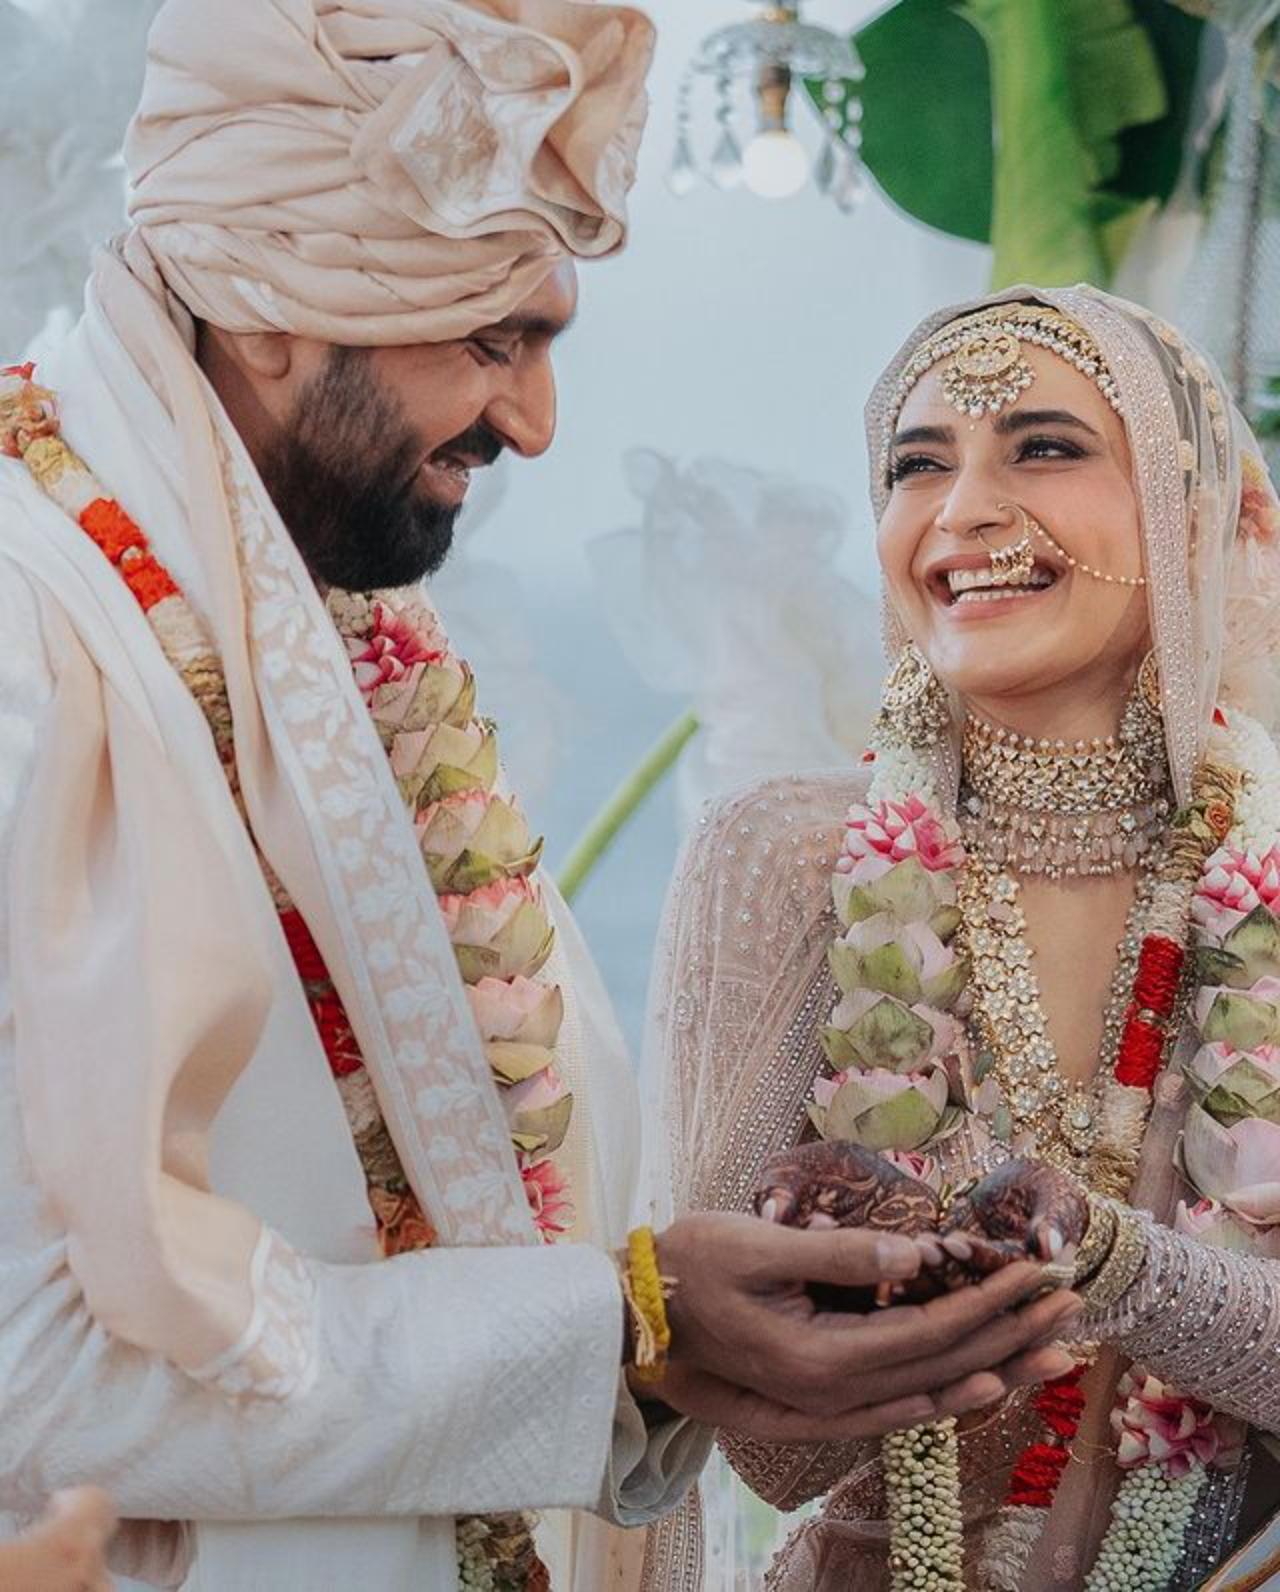 Actress Karishma Tanna got married to her longtime boyfriend Varun Bangera in February 2022